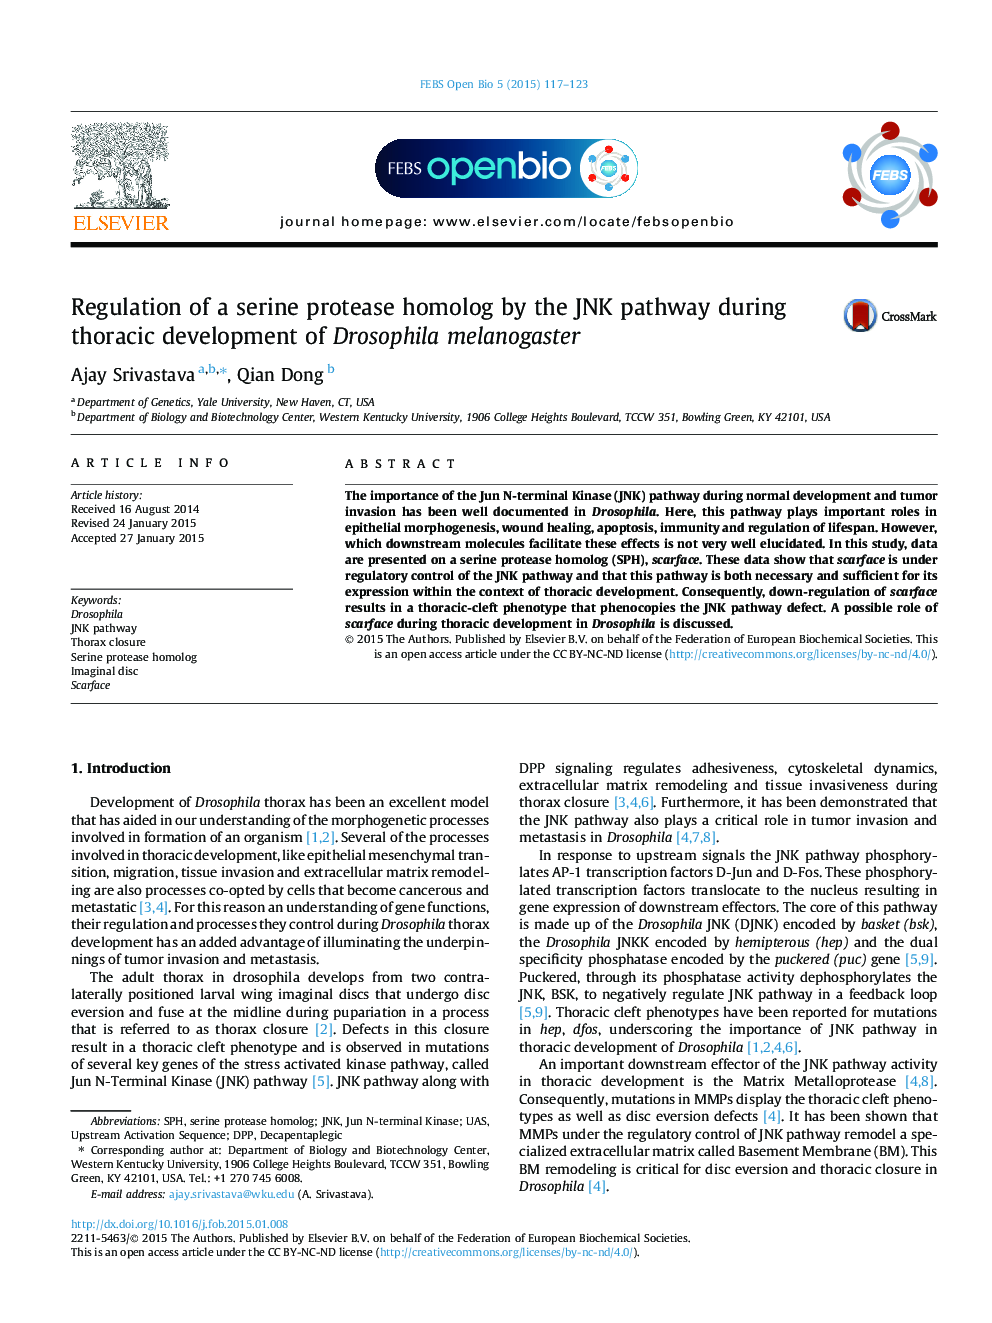 Regulation of a serine protease homolog by the JNK pathway during thoracic development of Drosophila melanogaster